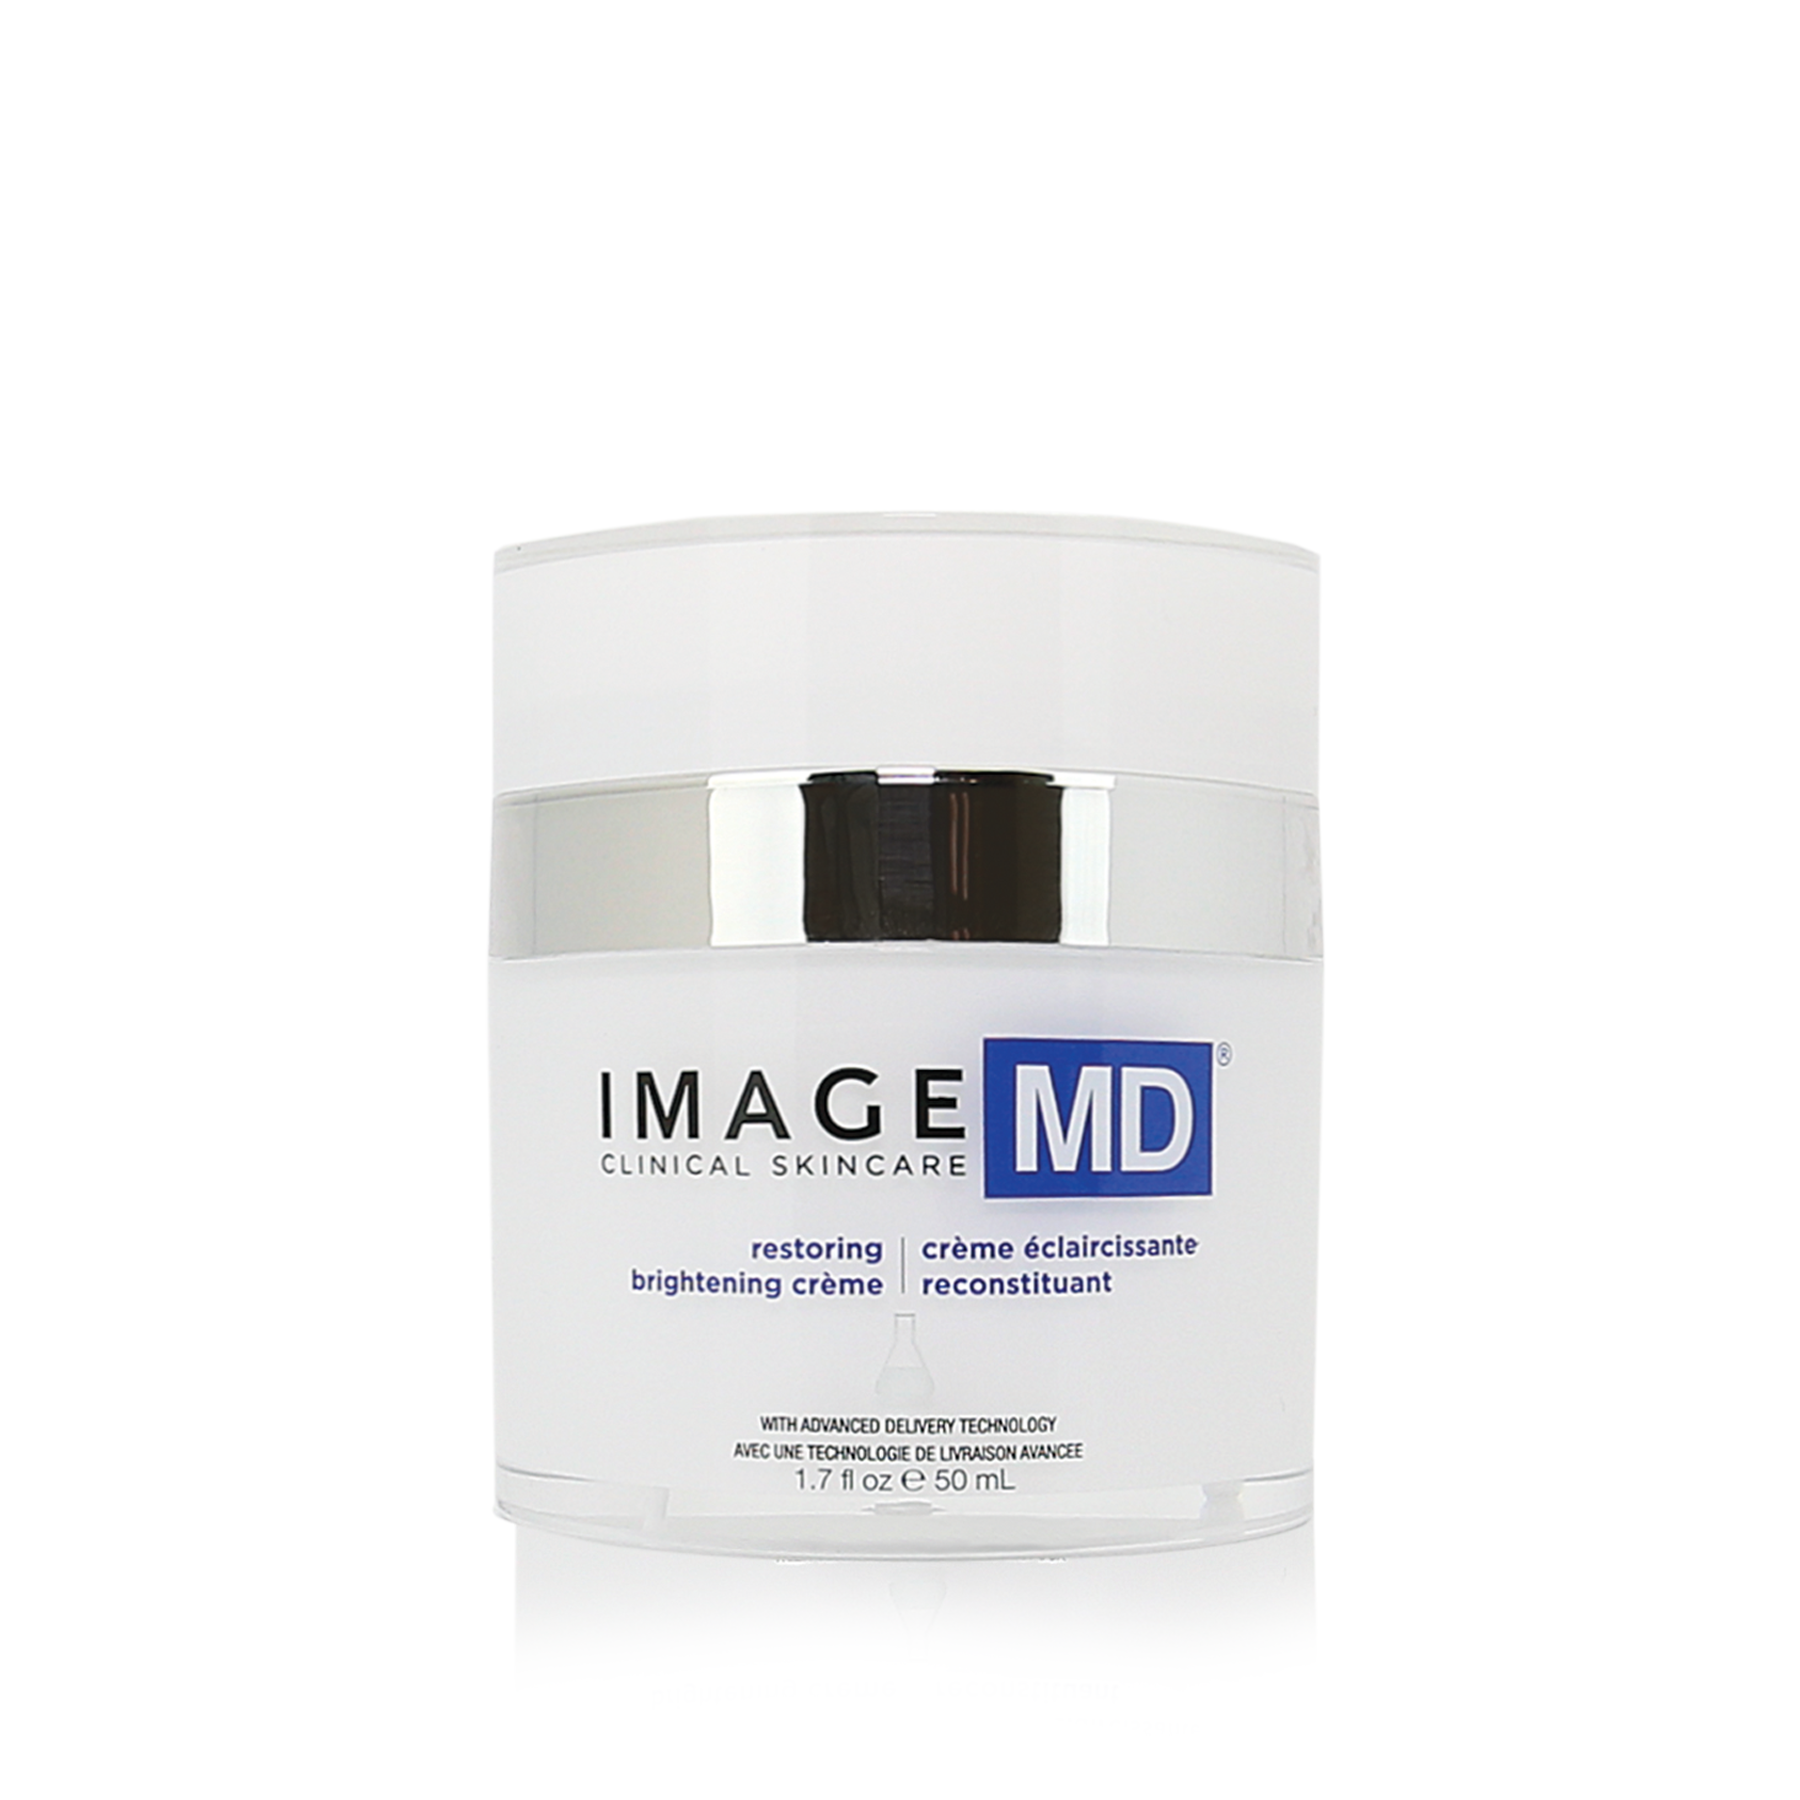 IMAGE MD - Restoring Brightening Crème